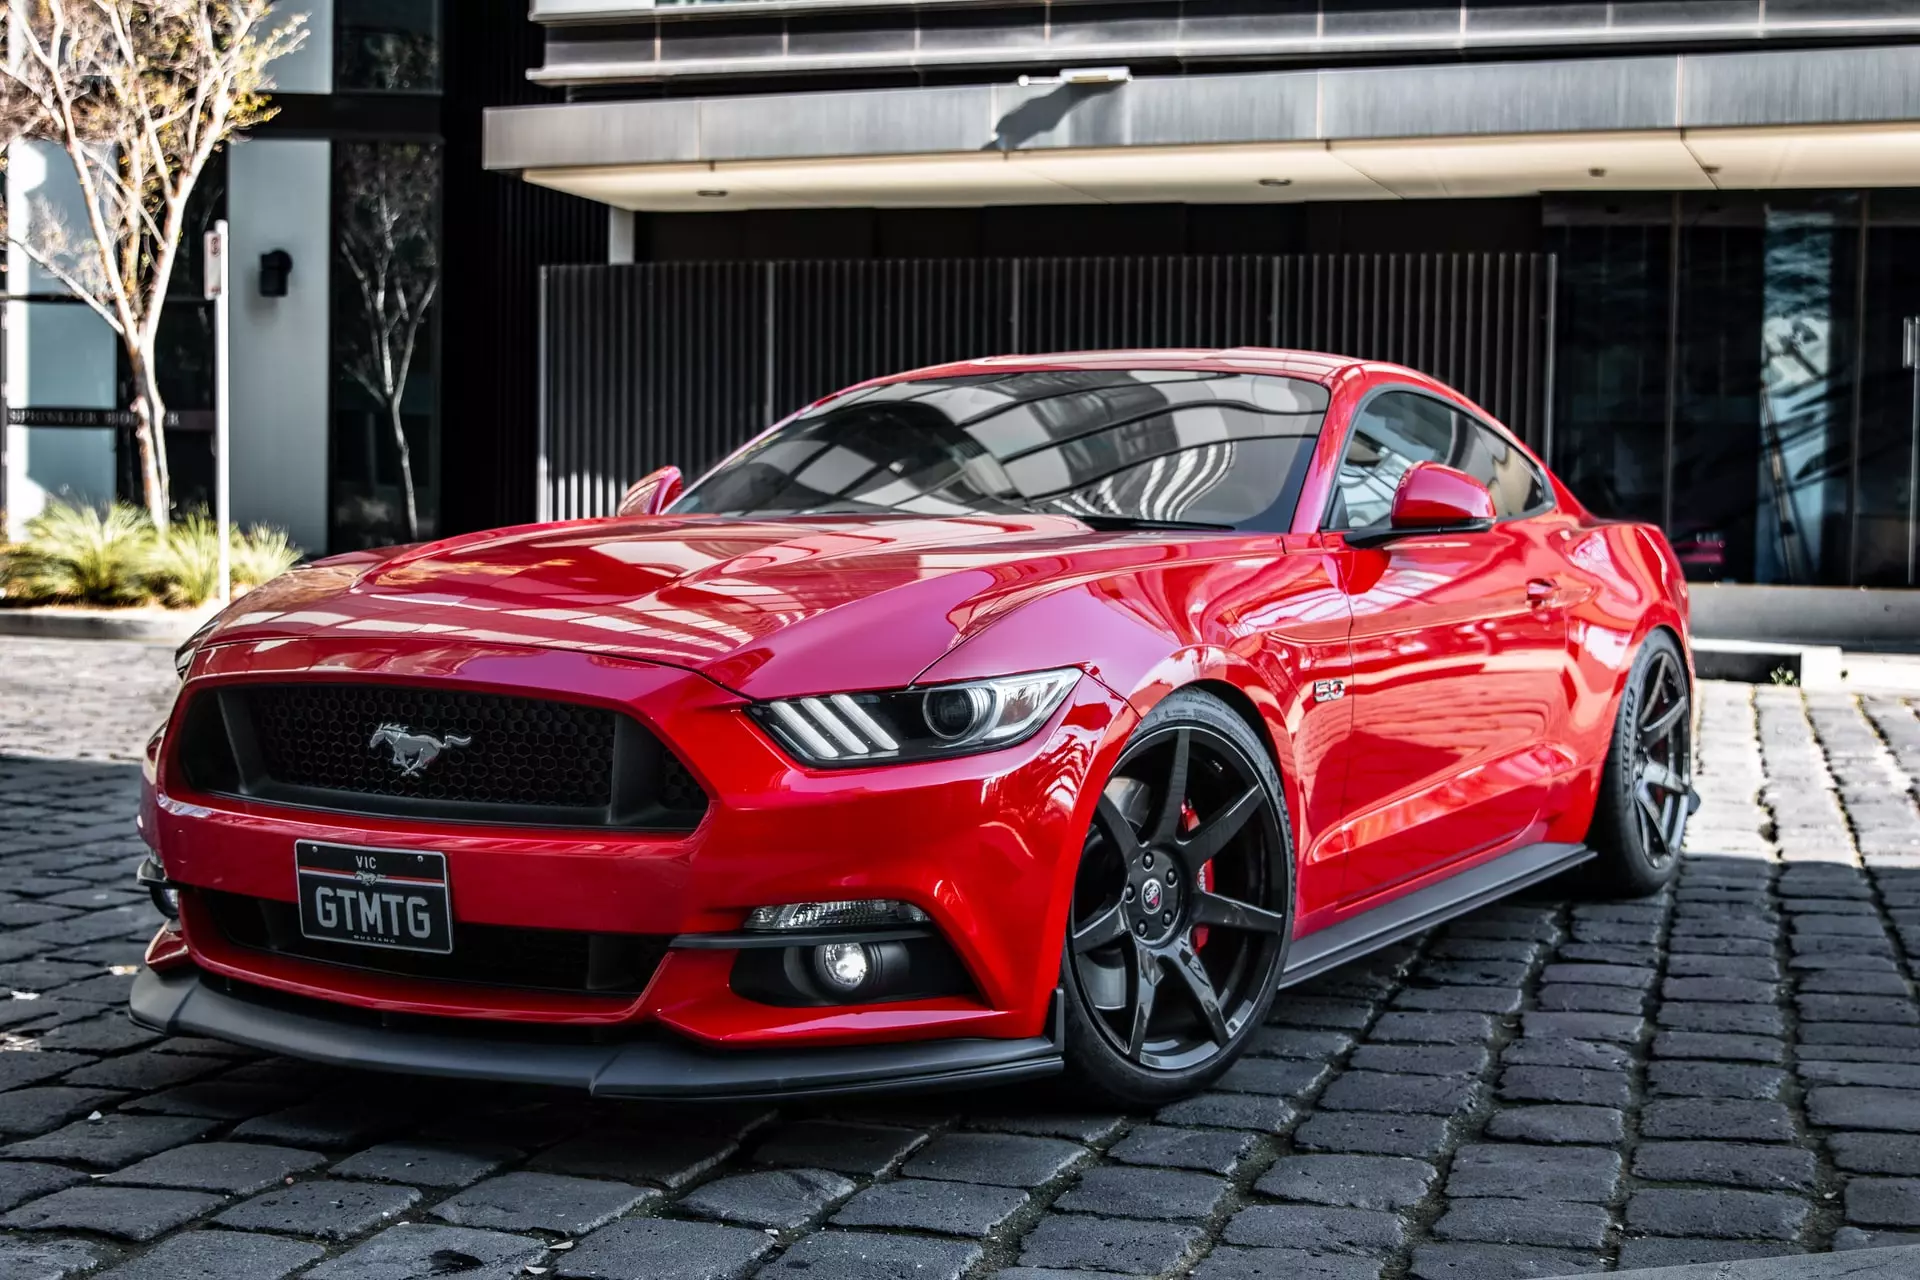 Voiture Mustang rouge dans la rue